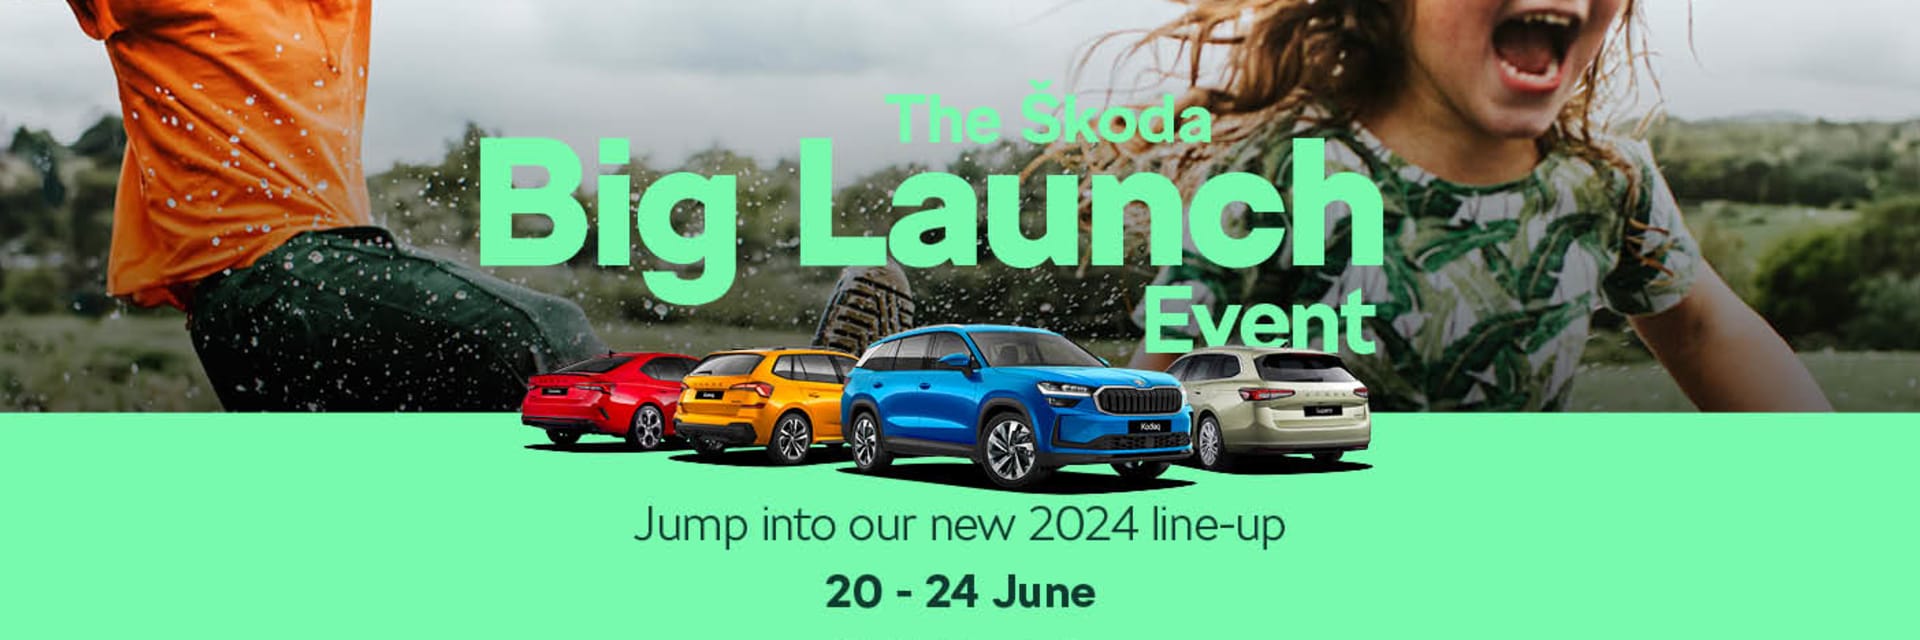 Skoda big launch event!